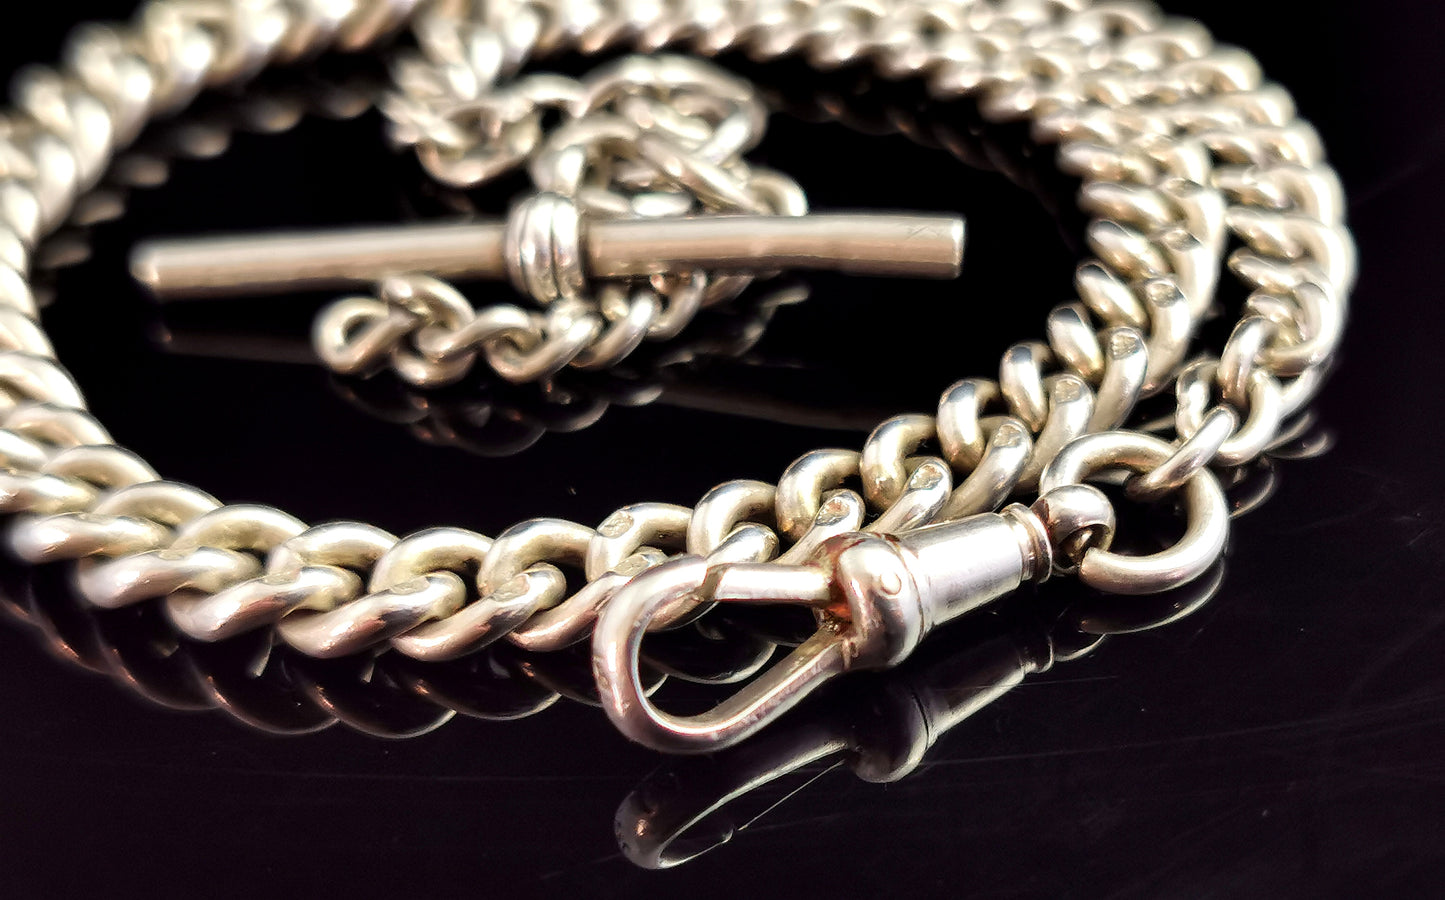 Antique Victorian silver Albert chain, watch chain, curb link